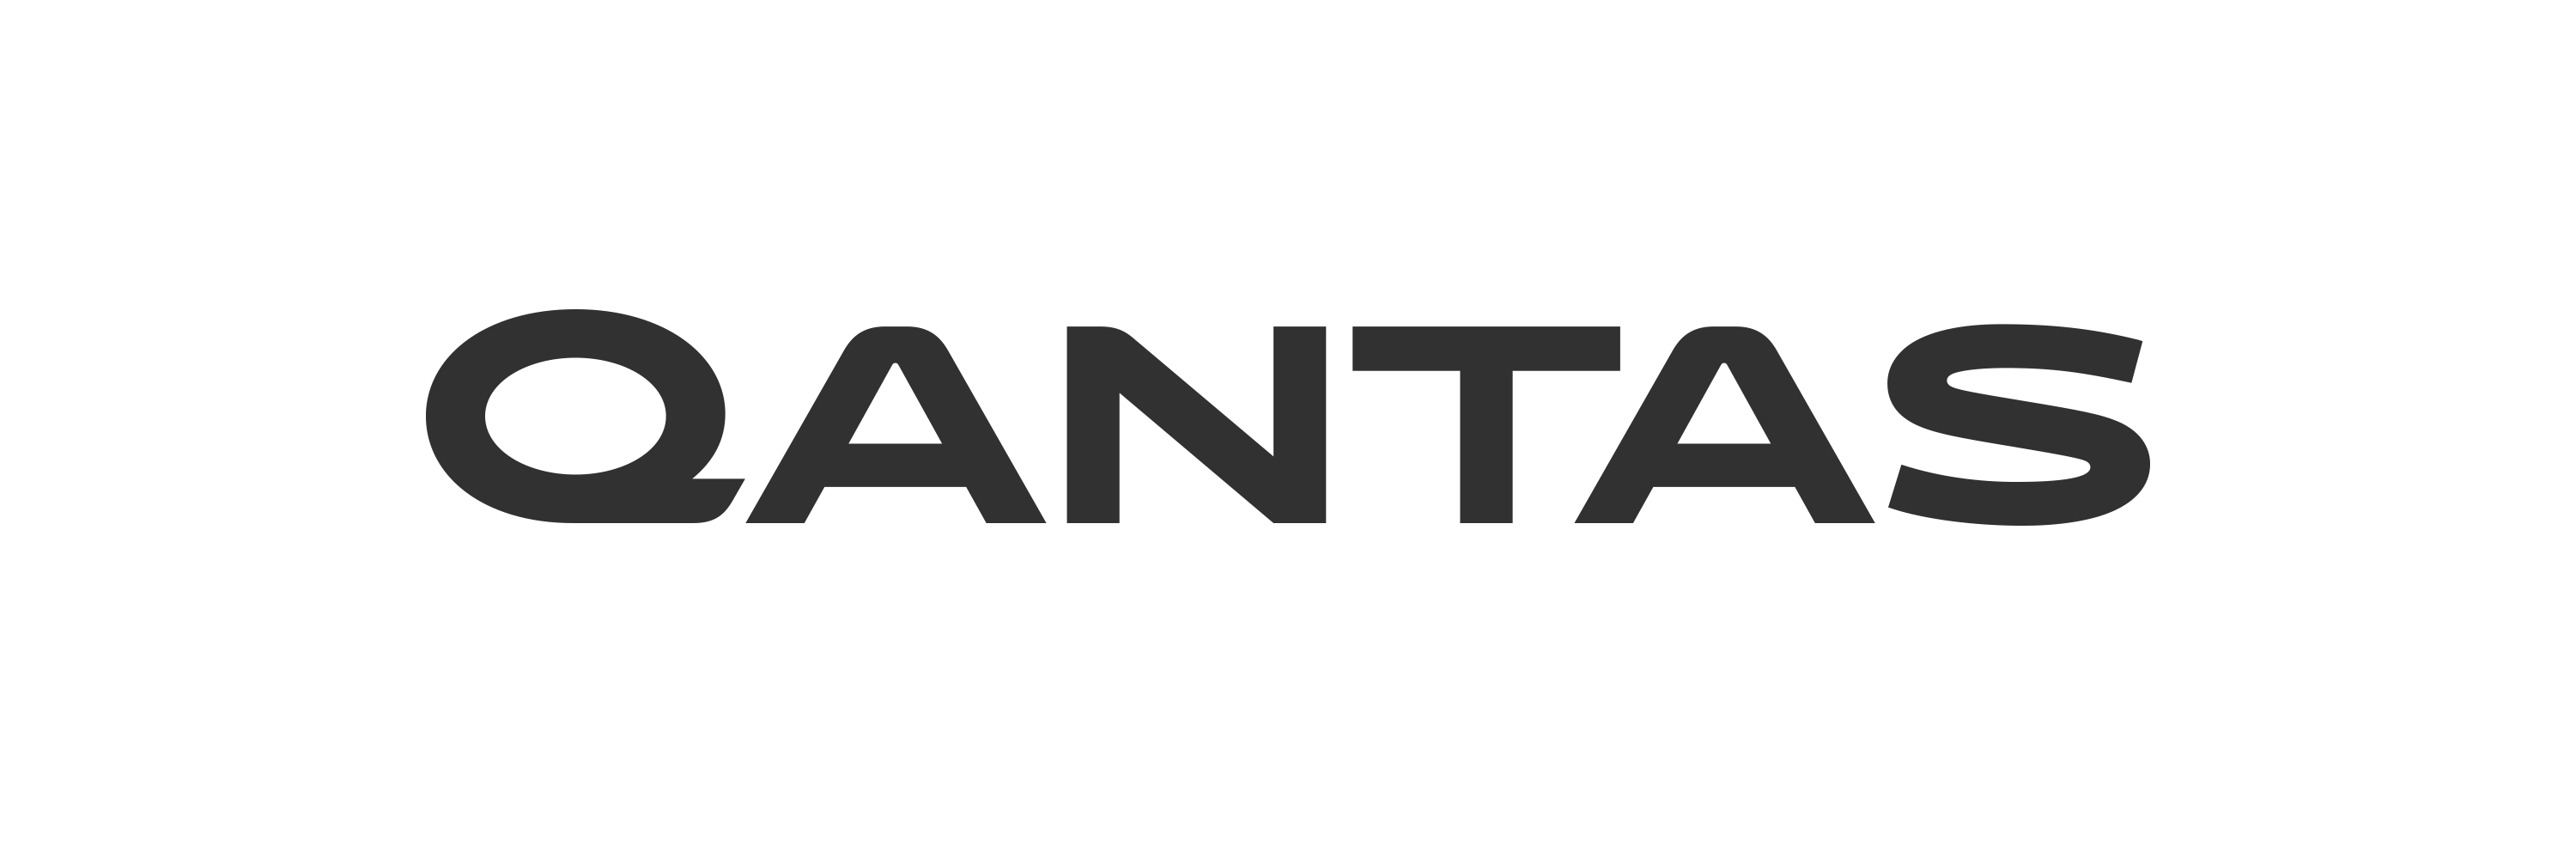 Qantas Logo - Qantas Group